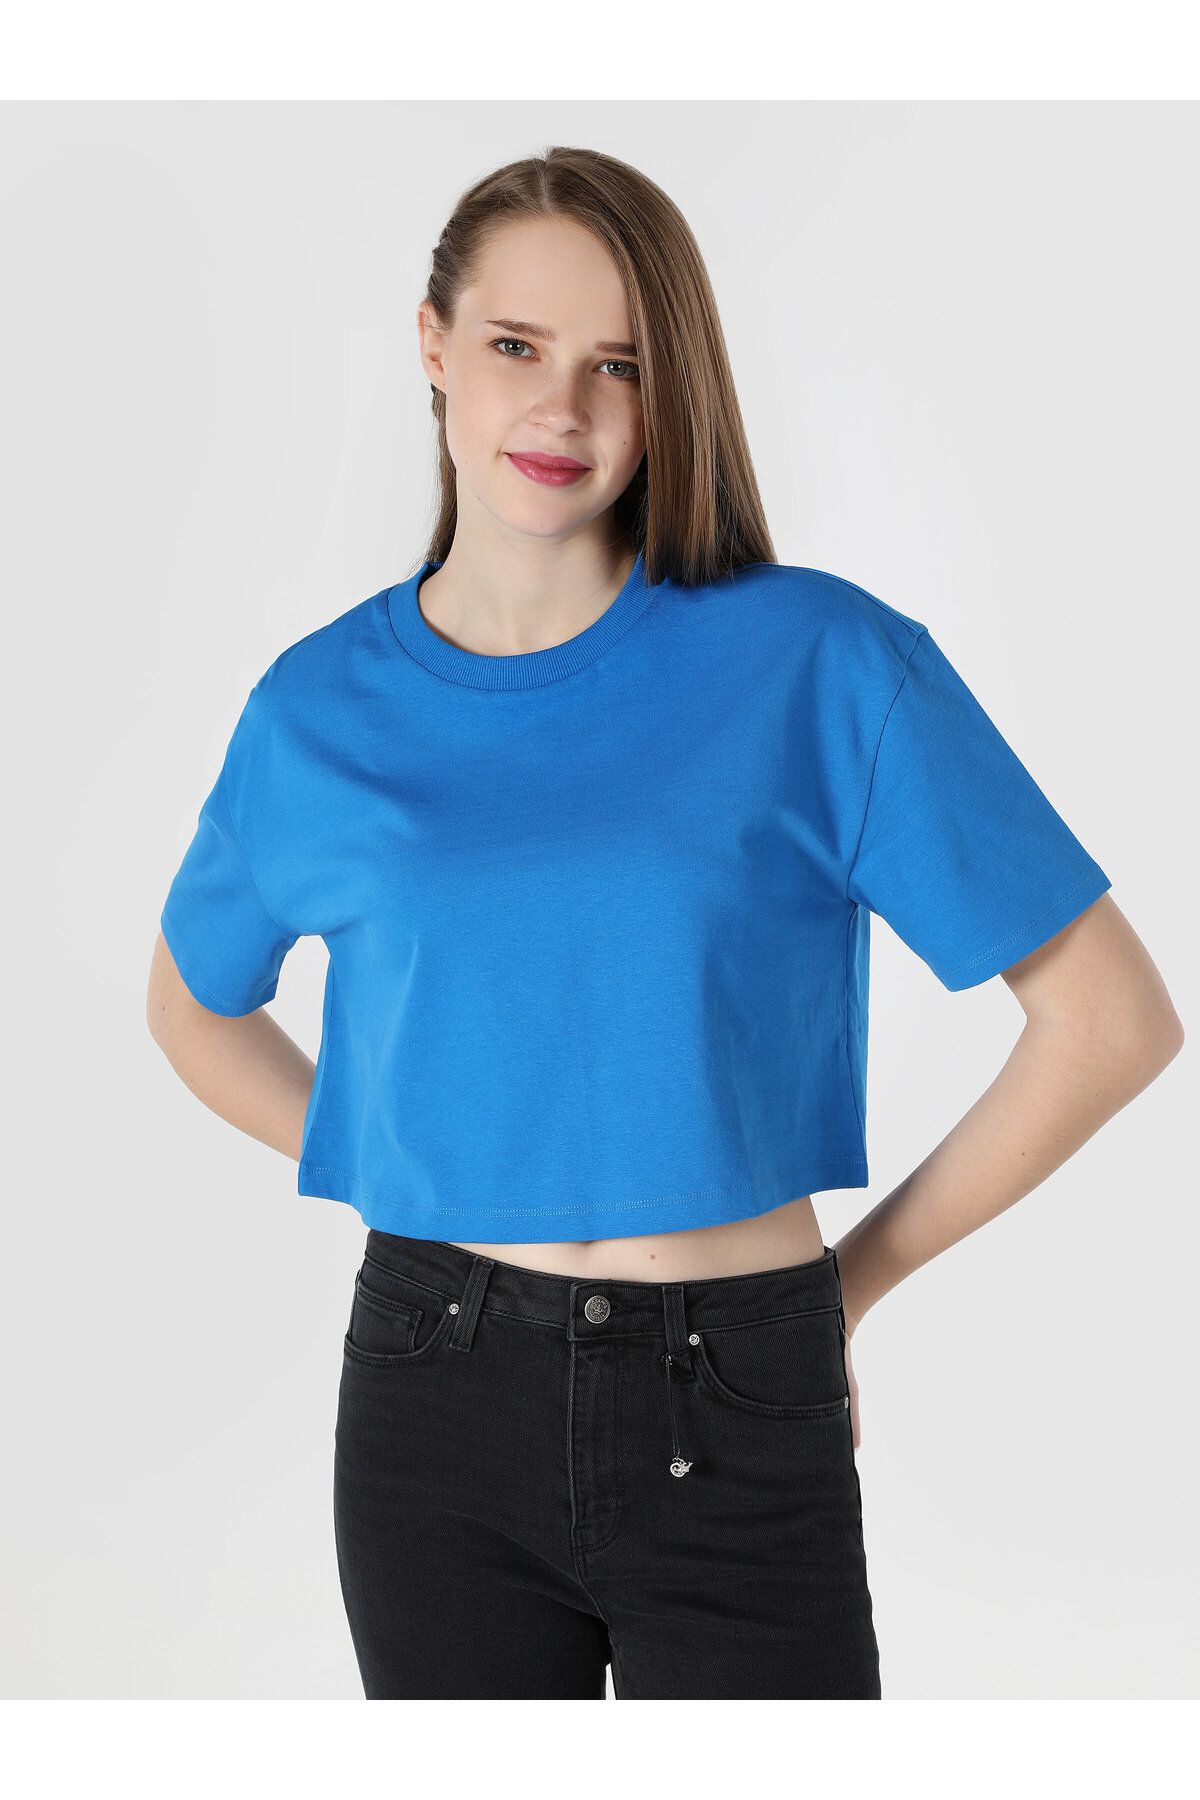 Colin’s تی شرت آستین کوتاه زنانه آبی با تناسب معمولی